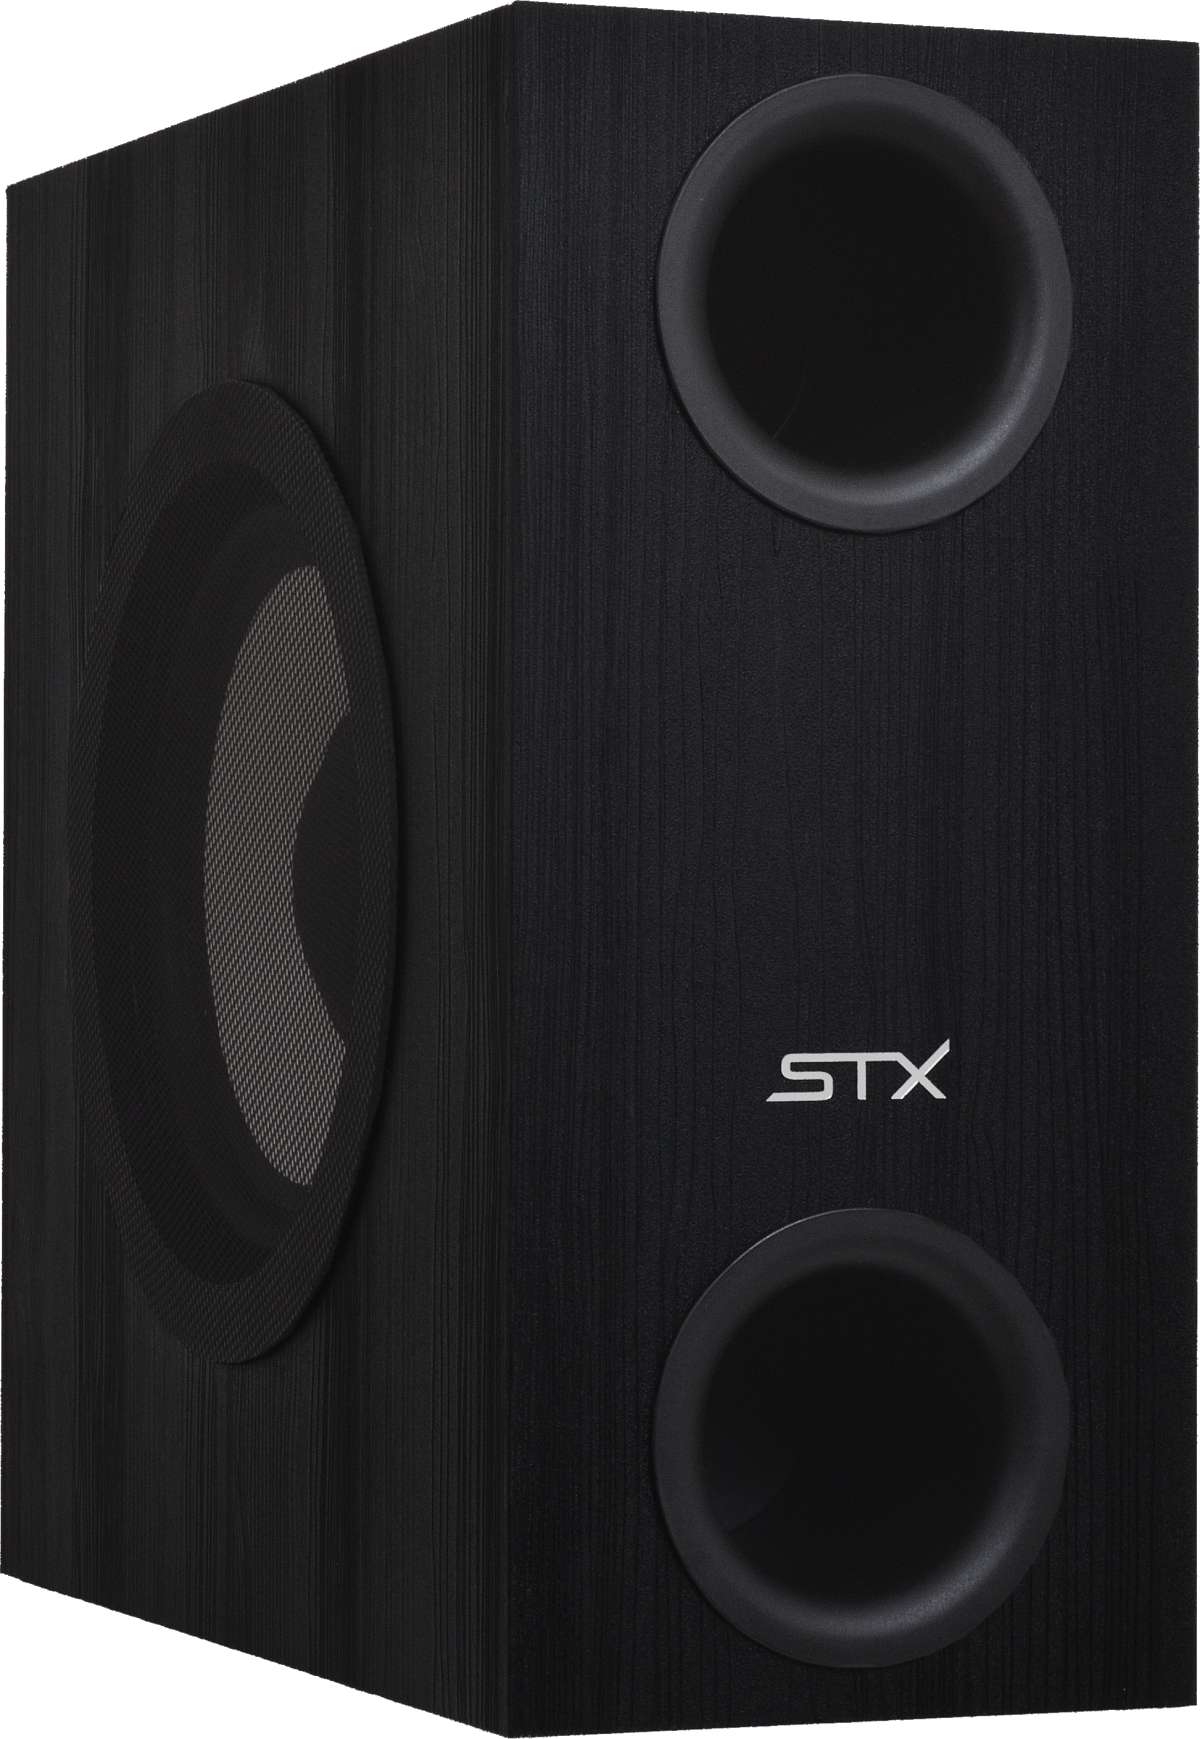 STX Quant 300 S active subwoofer speakers